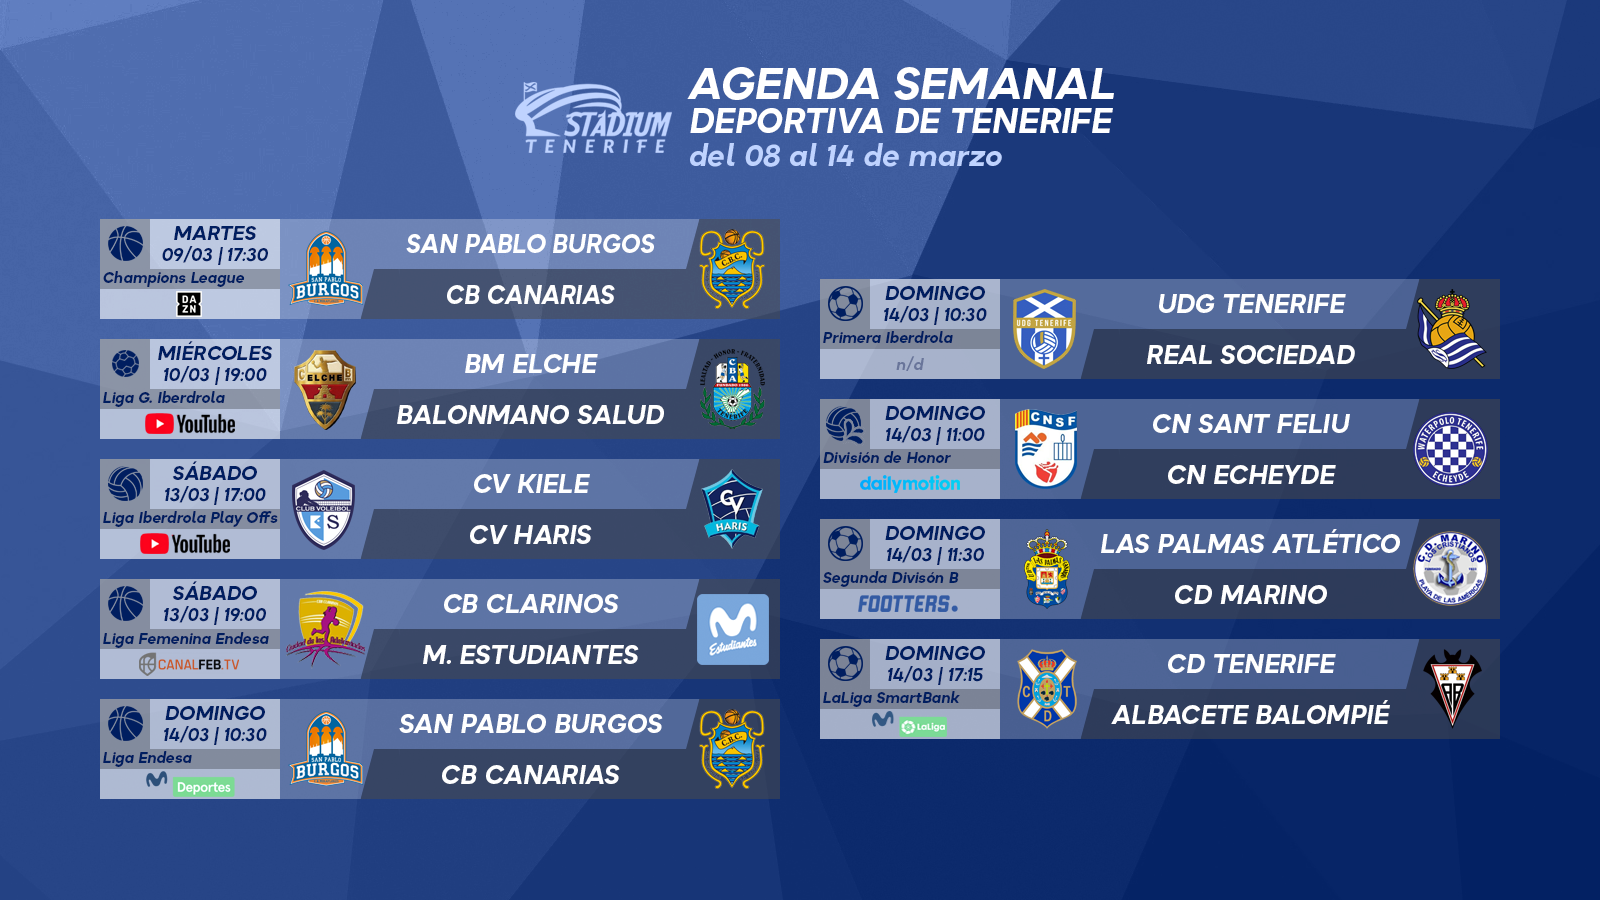 Agenda Semanal Deportiva de Tenerife (8 al 14 de marzo)